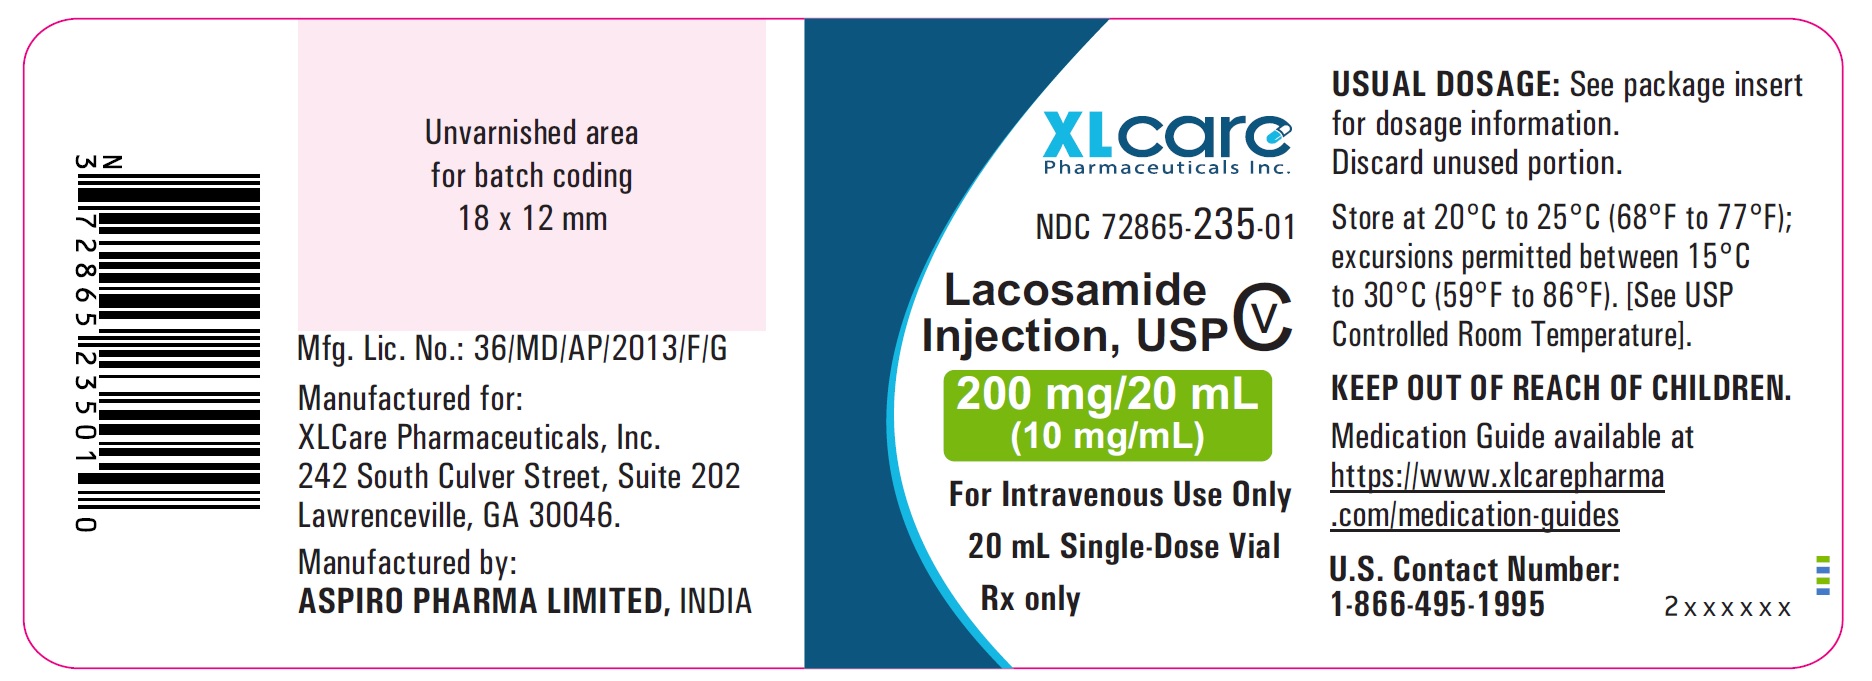 lacosamide-inj-vial-label-10-mg-ml